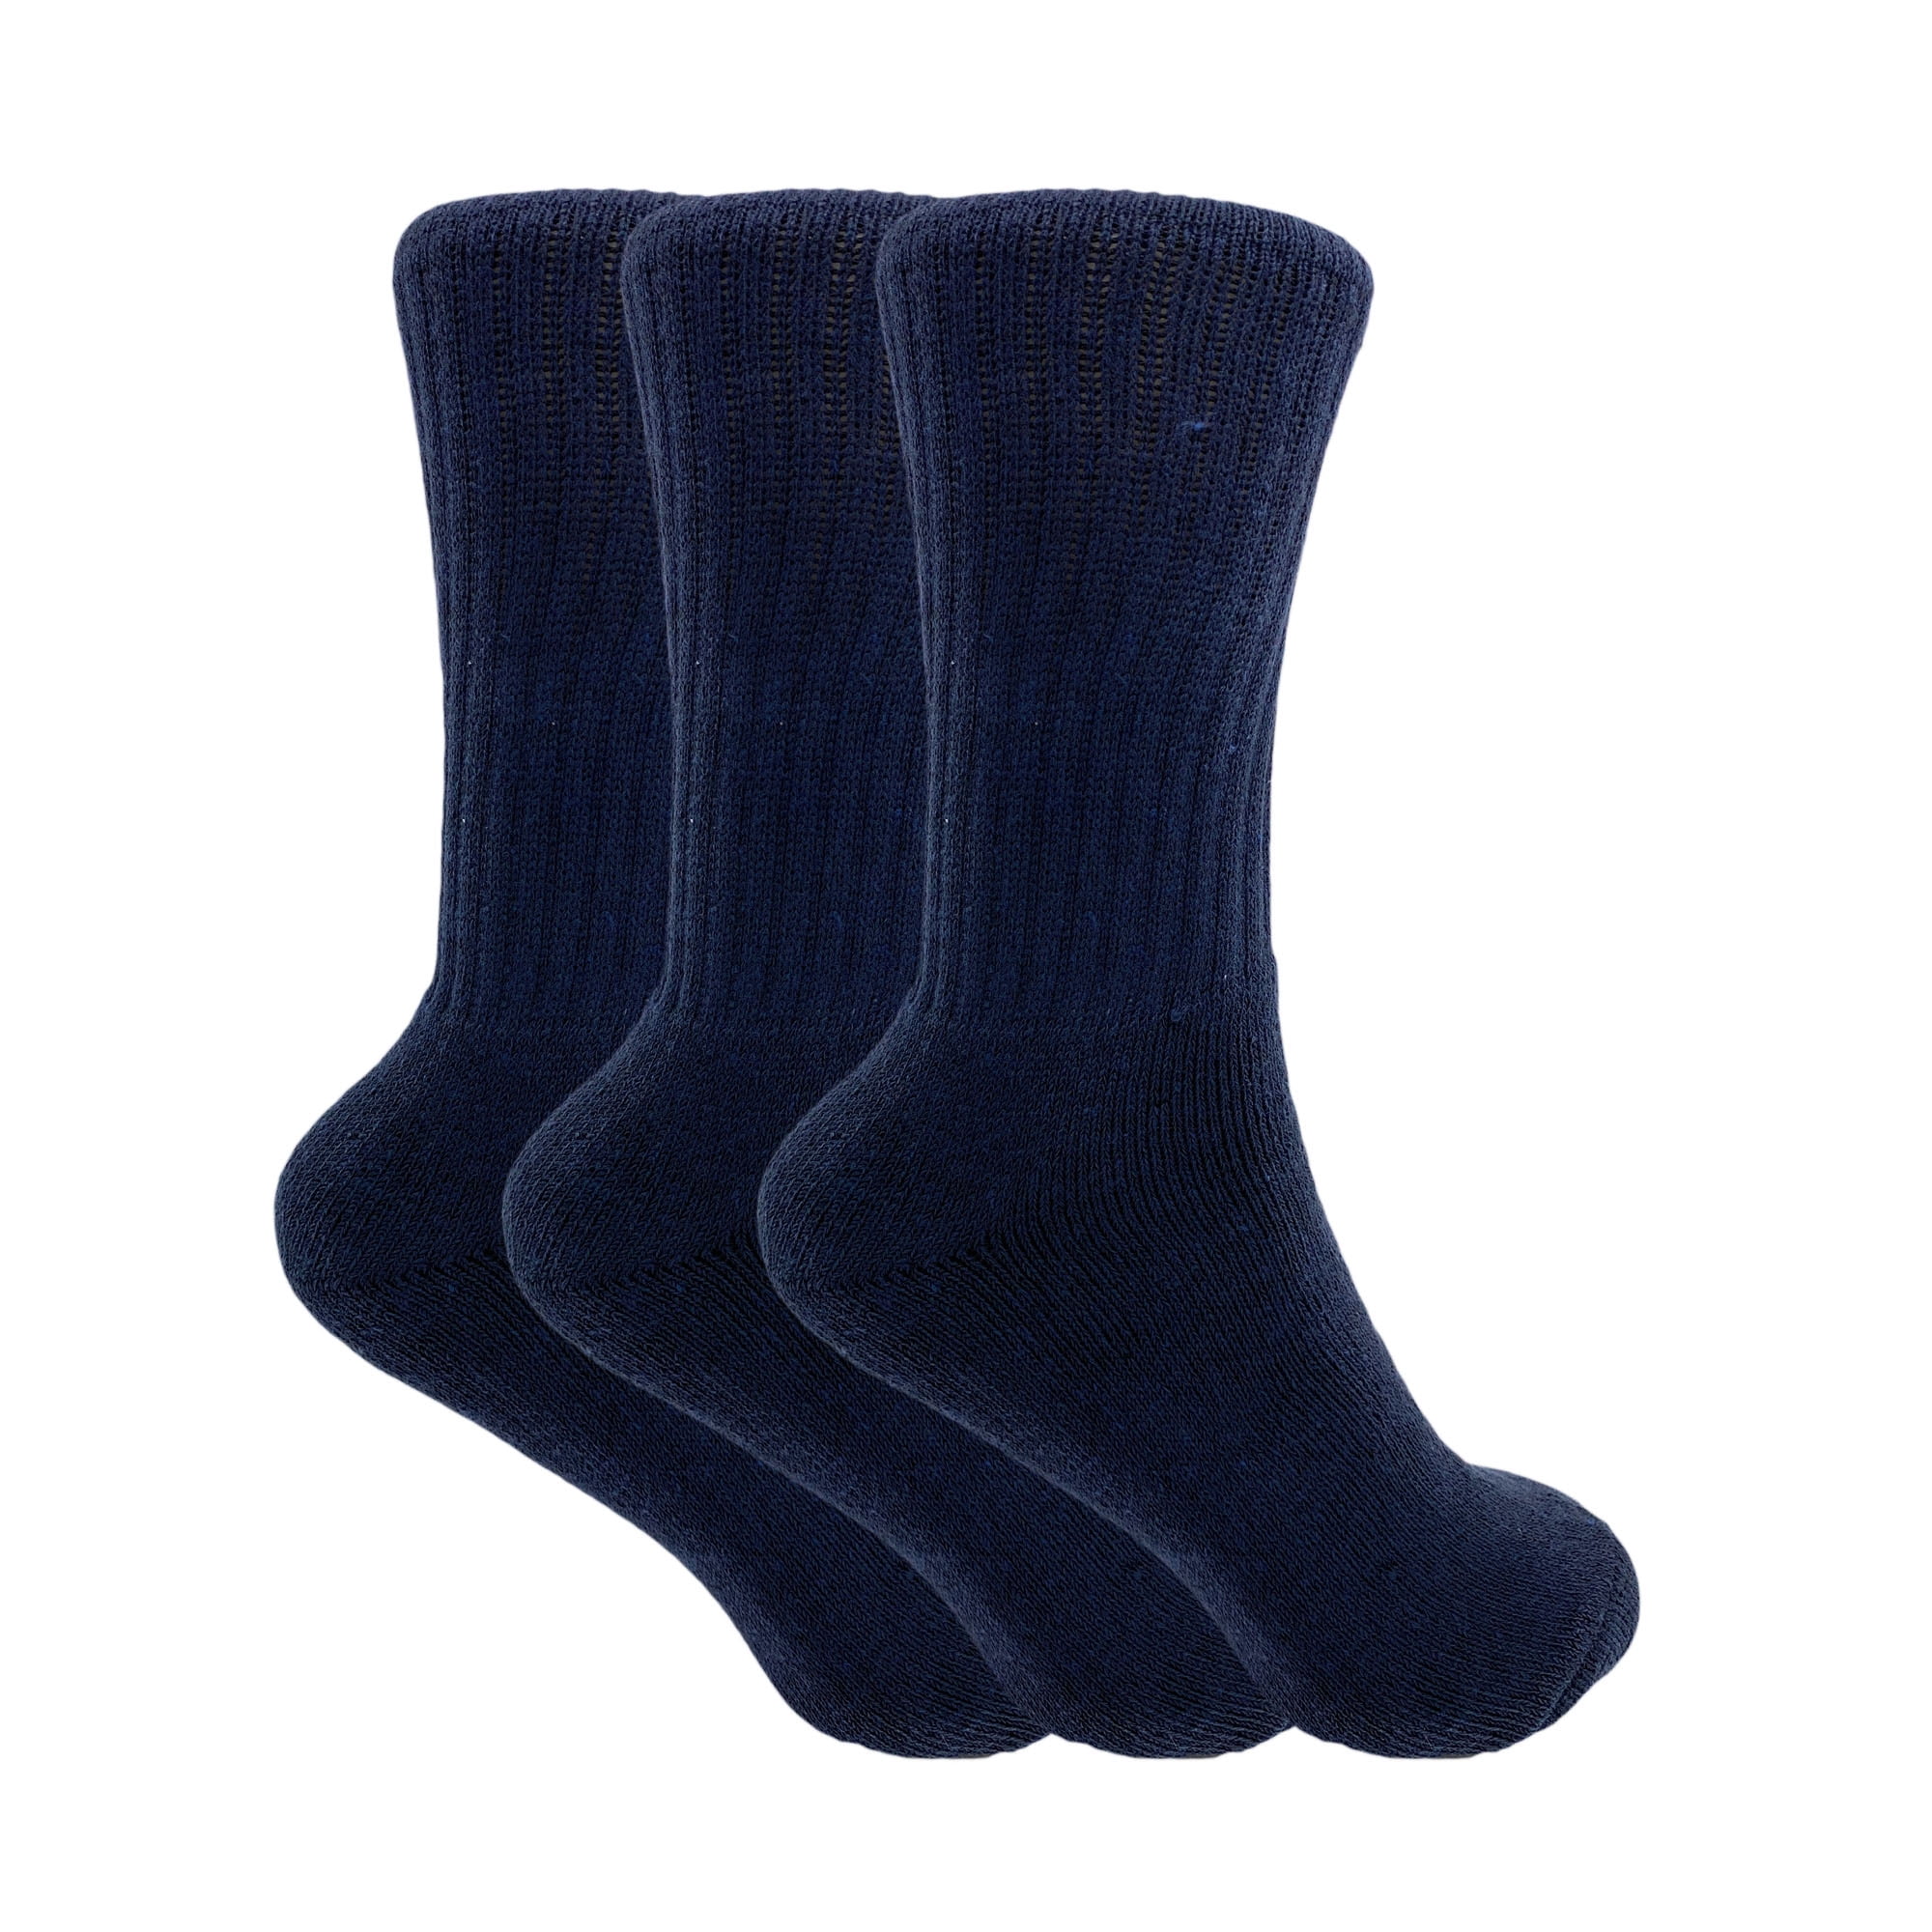 3 Pair High Sierra Wool Socks Crew Quarter Size 9-11 Shoe Size 4-10 New 